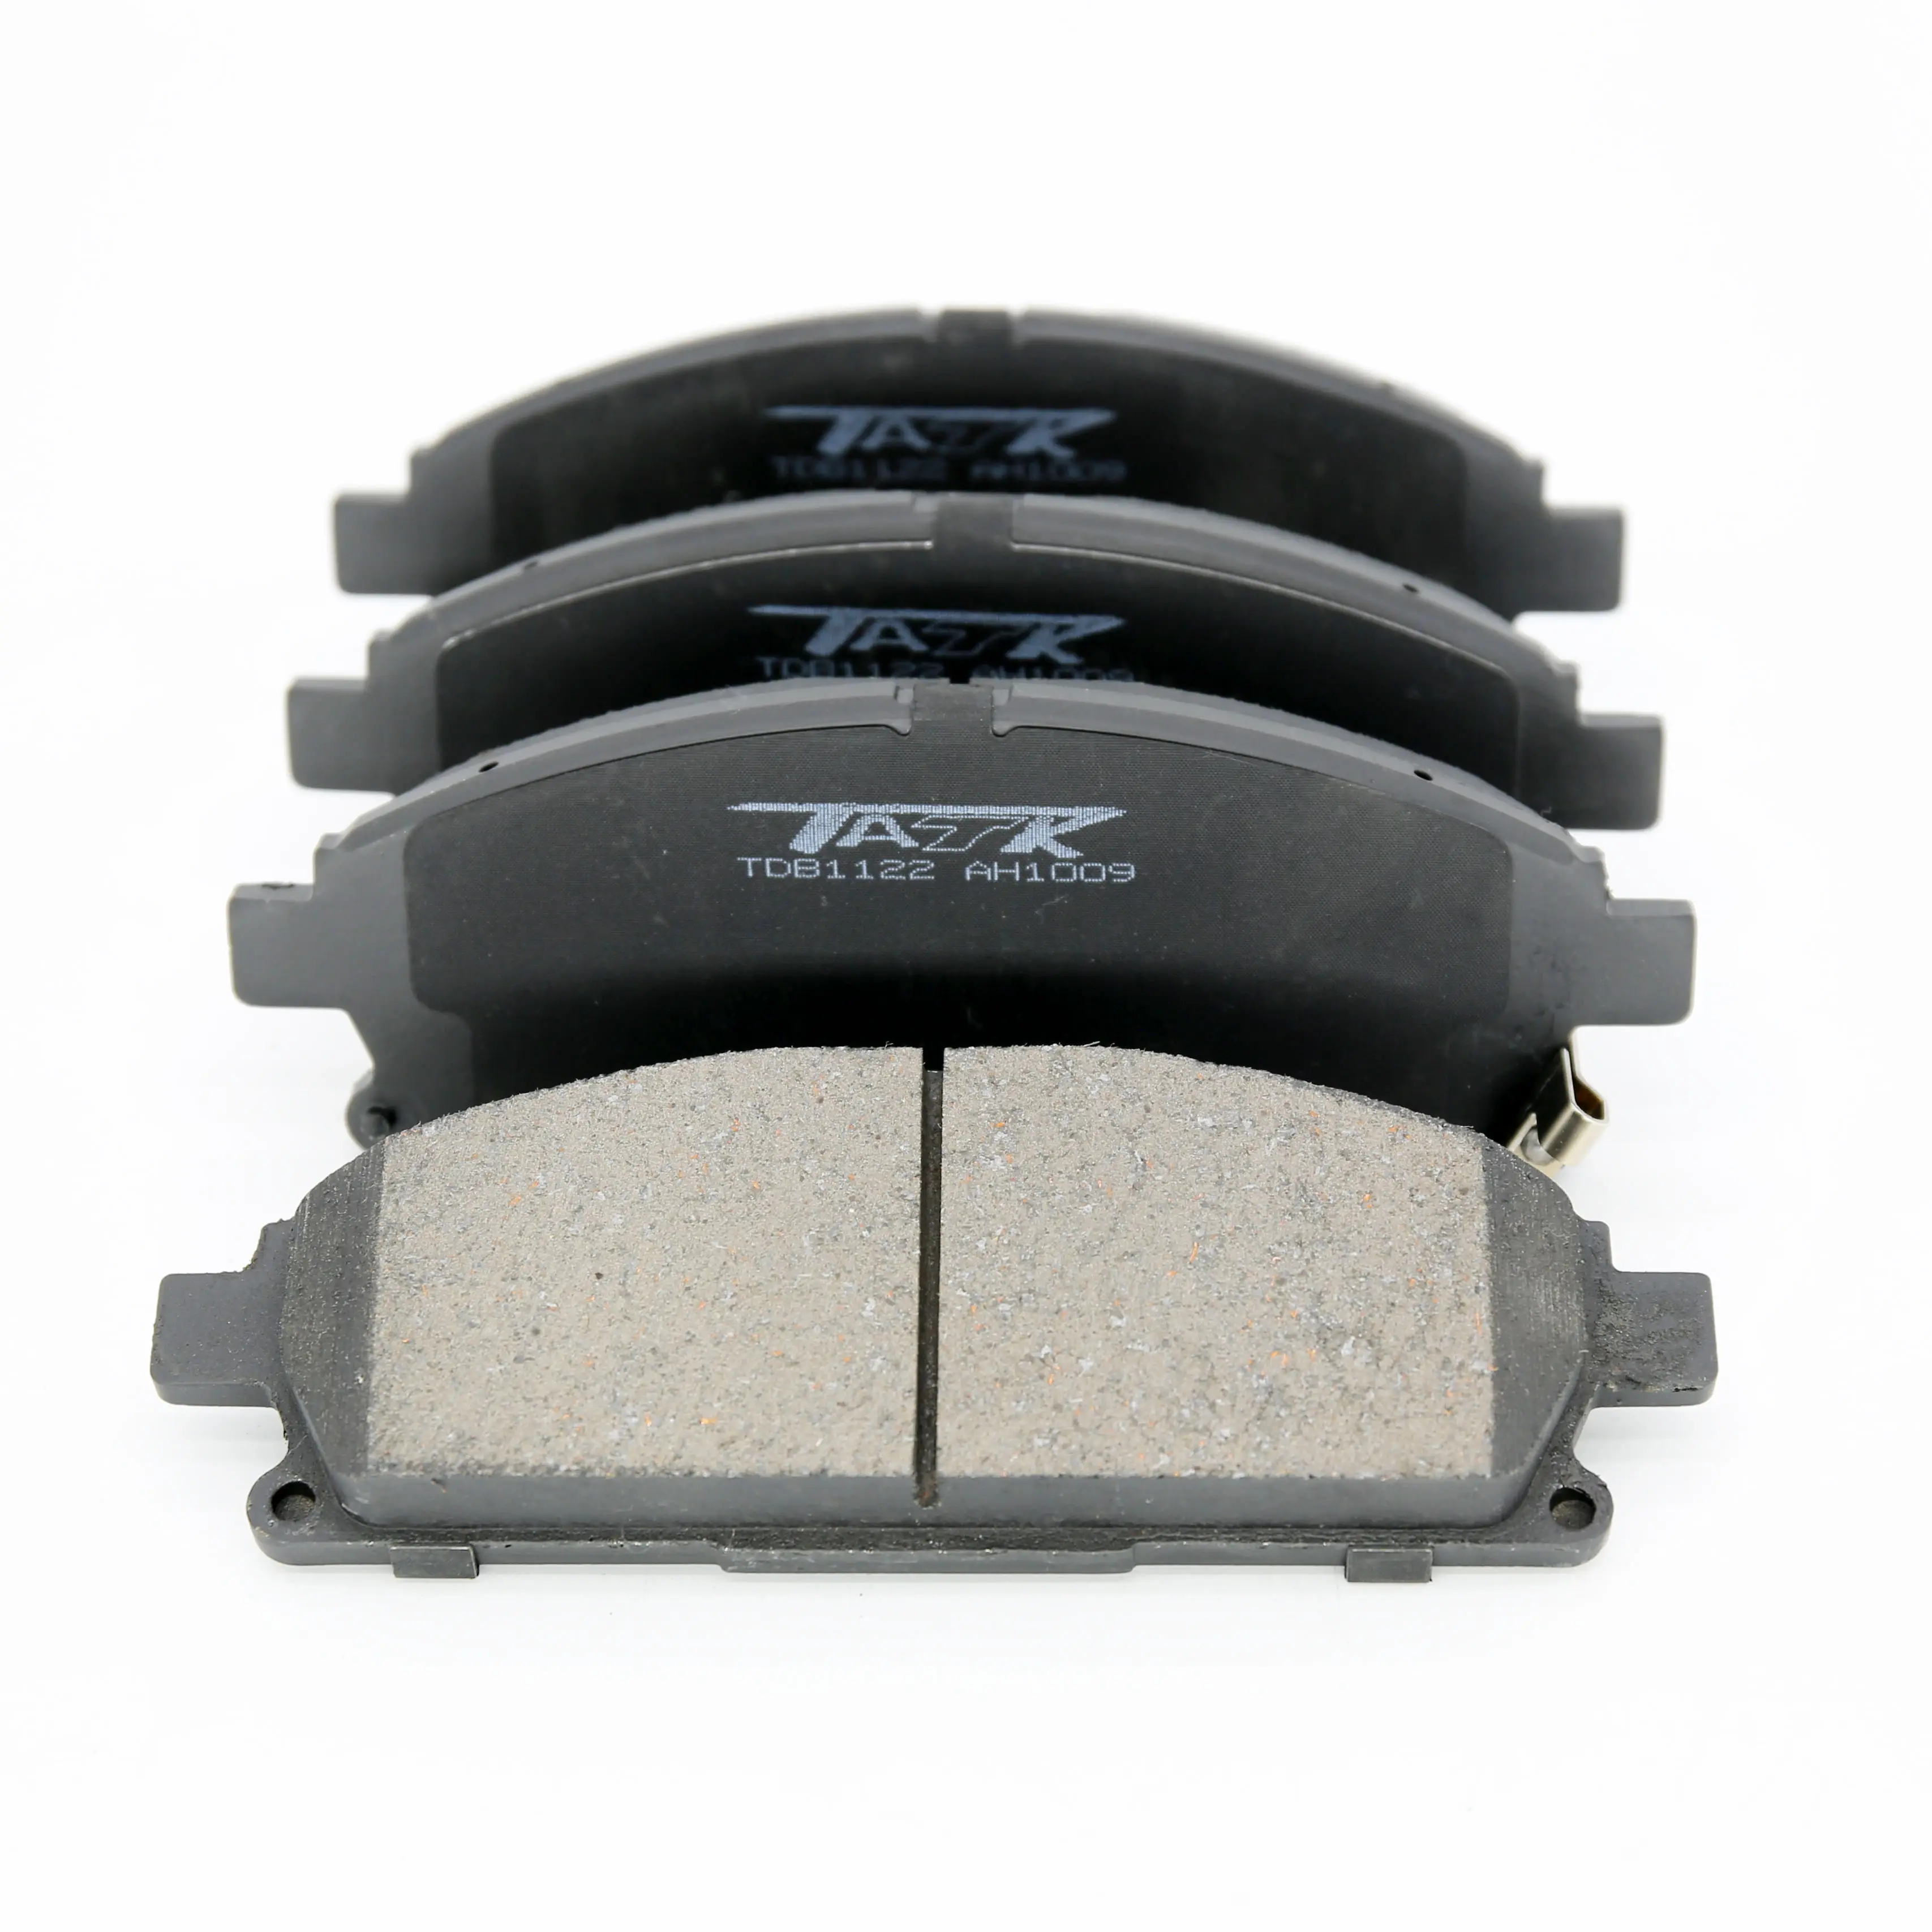 tatk OEM Premium for nissan brake pads ceramic  nissan maxima break pads 2013 front  brake pads for x-trail tiida sunny